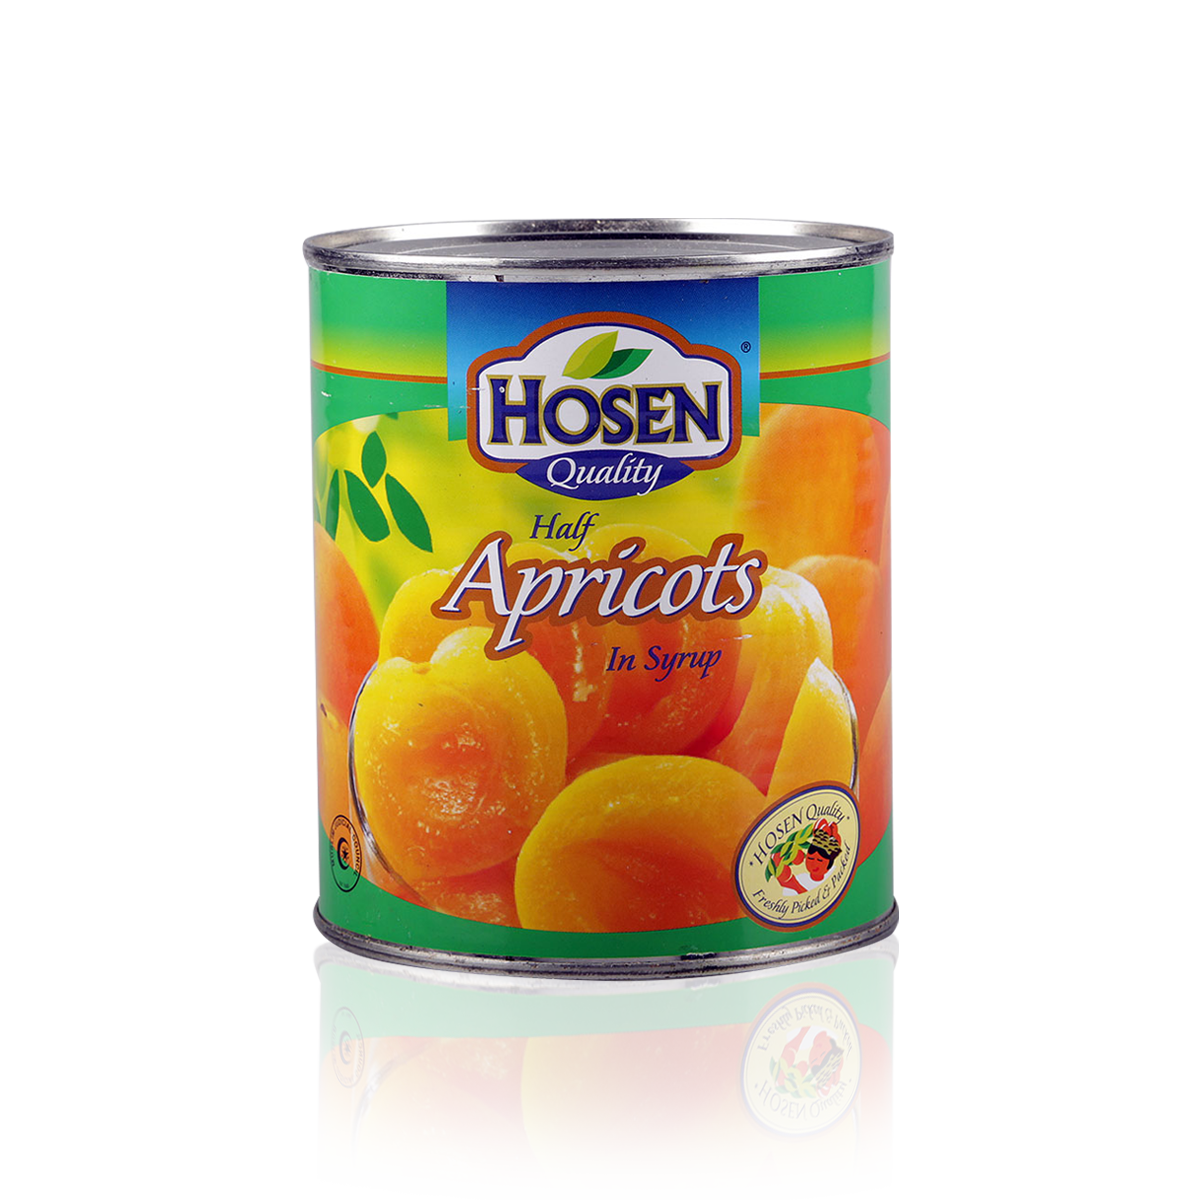 Hosen компот чангаанз 825гр;Hosen compote apricots 825g;Компот Hosen абрикосовый 825г